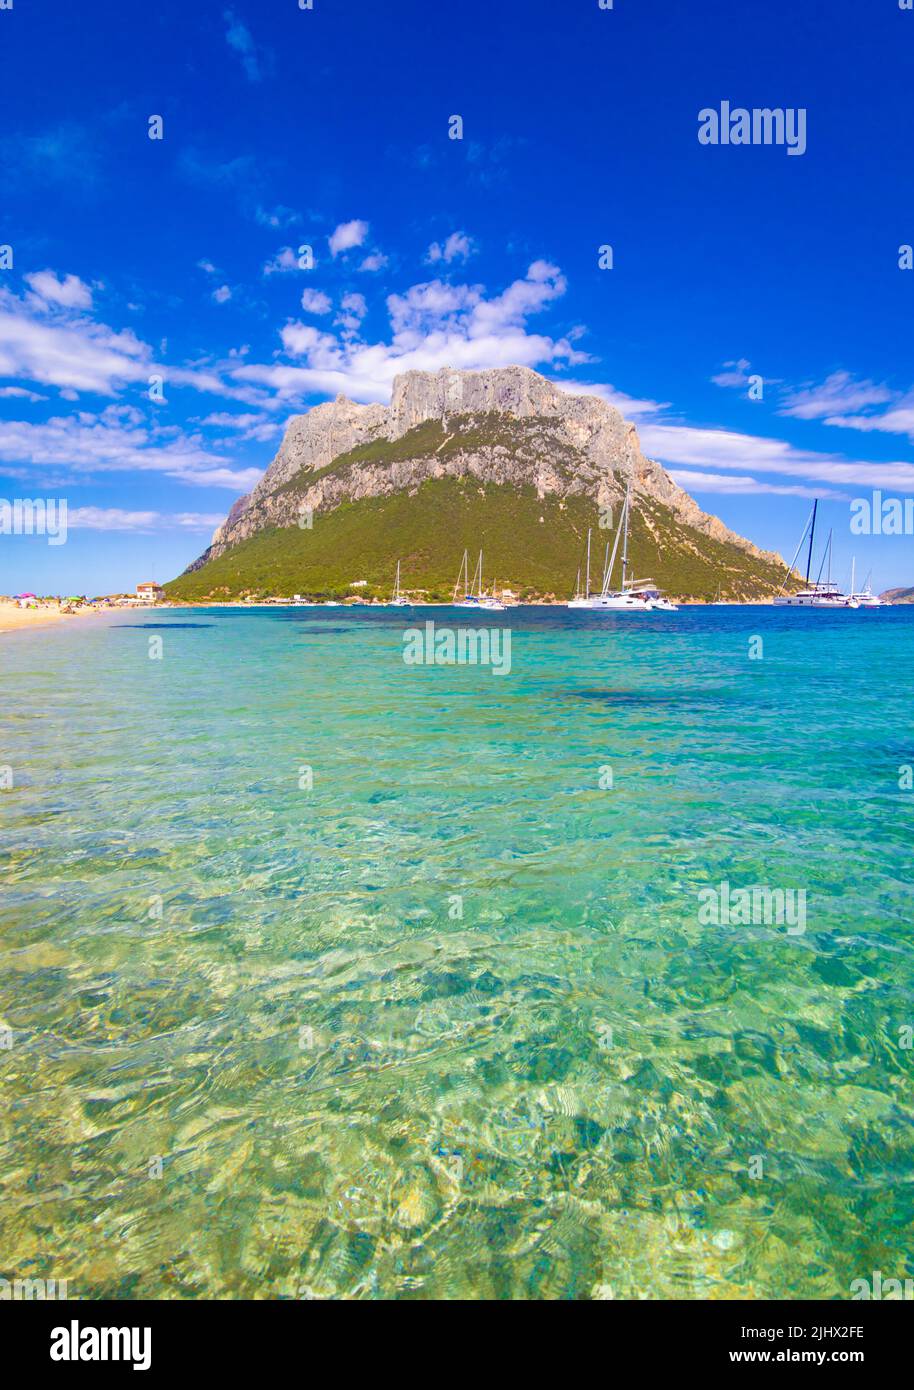 Isola di Tavolara in Sardegna (Italy) - The worderful mountain island in Sardinia region, with beach, blue sea, and incredible alpinistic trekking Stock Photo